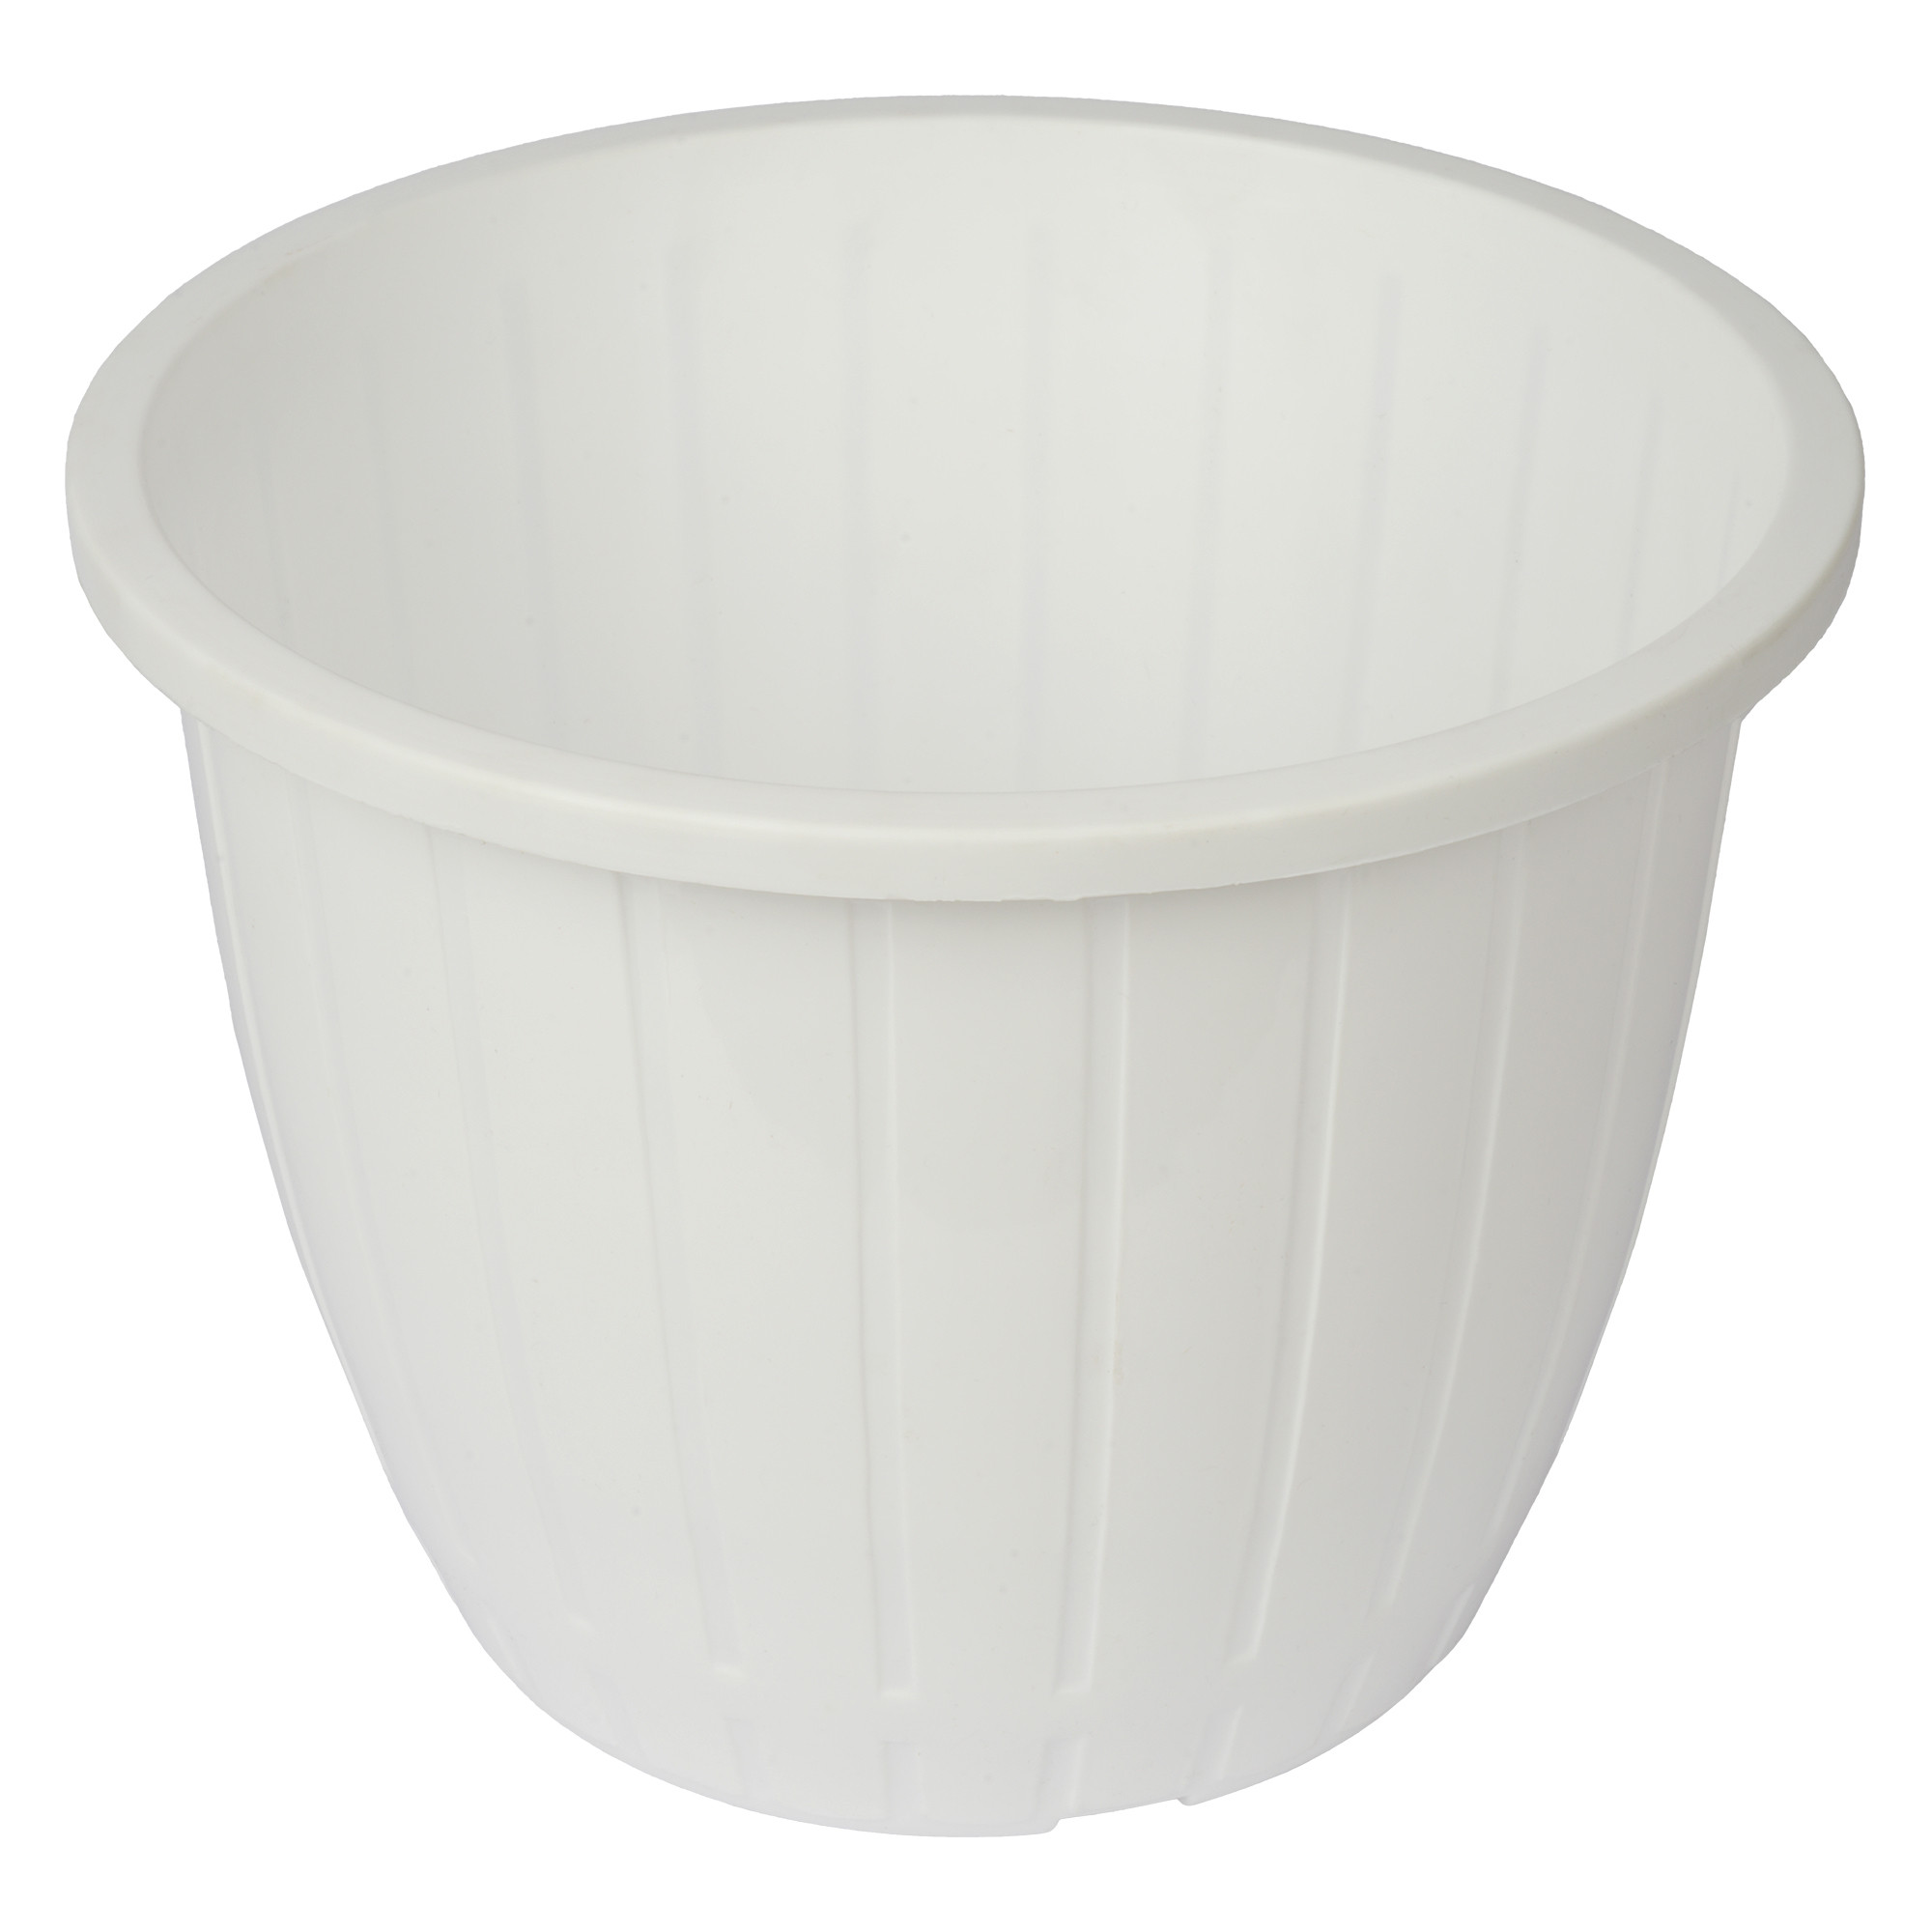 Kuber Industries Flower Pot | Flower Pots for Indoor & Outdoor | Plastic Pot for Gardening | Planter for Flower | Balcony Flower Pot with Drain Holes | Duro Flower Pot | 6 Inch |White